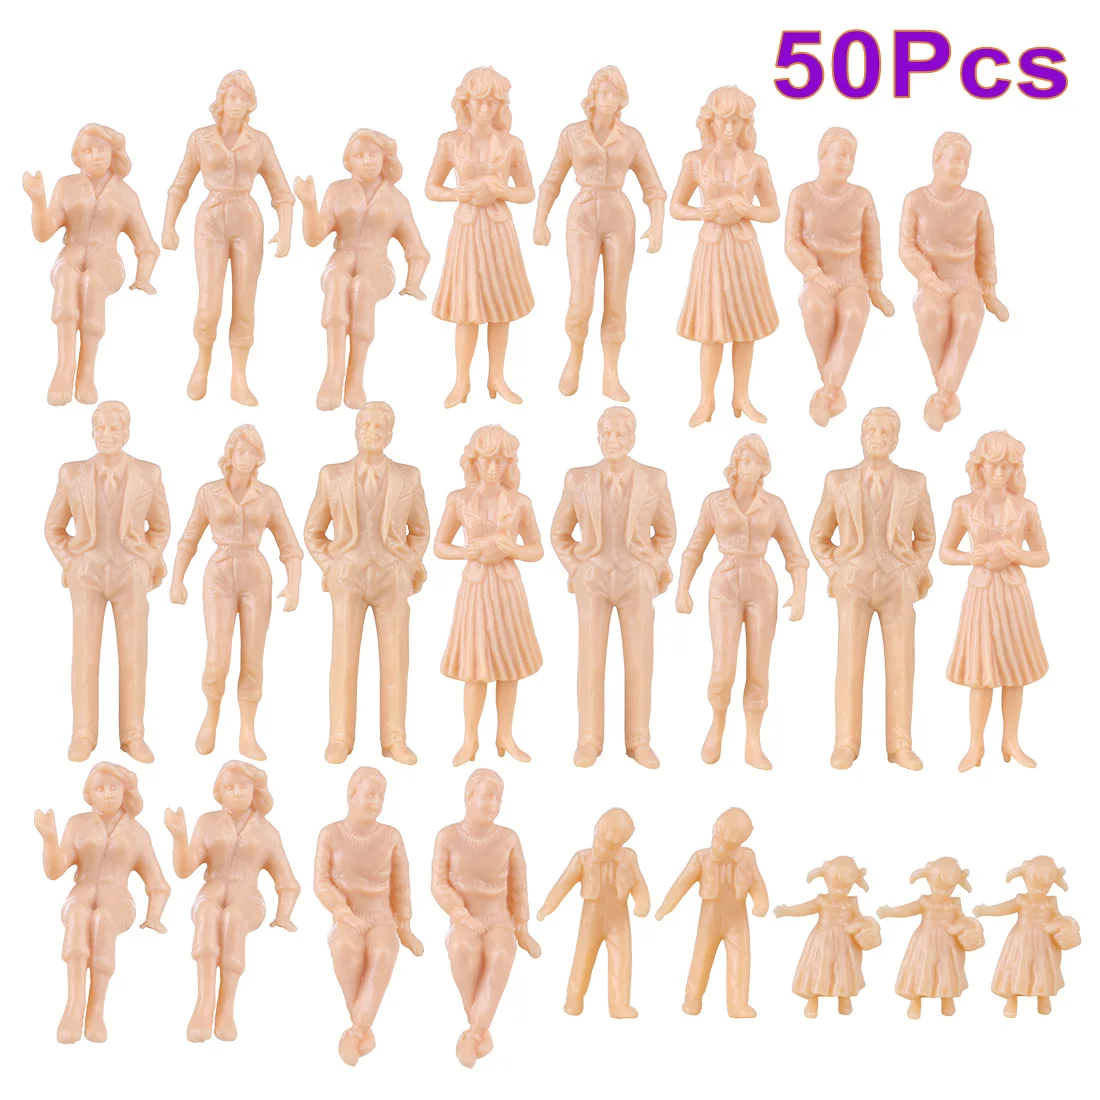 

25/50Pcs 1:30 Scale Miniature People Figures Model for Train Railway Alloy RC Car Sand Table - Skin(Random Type)